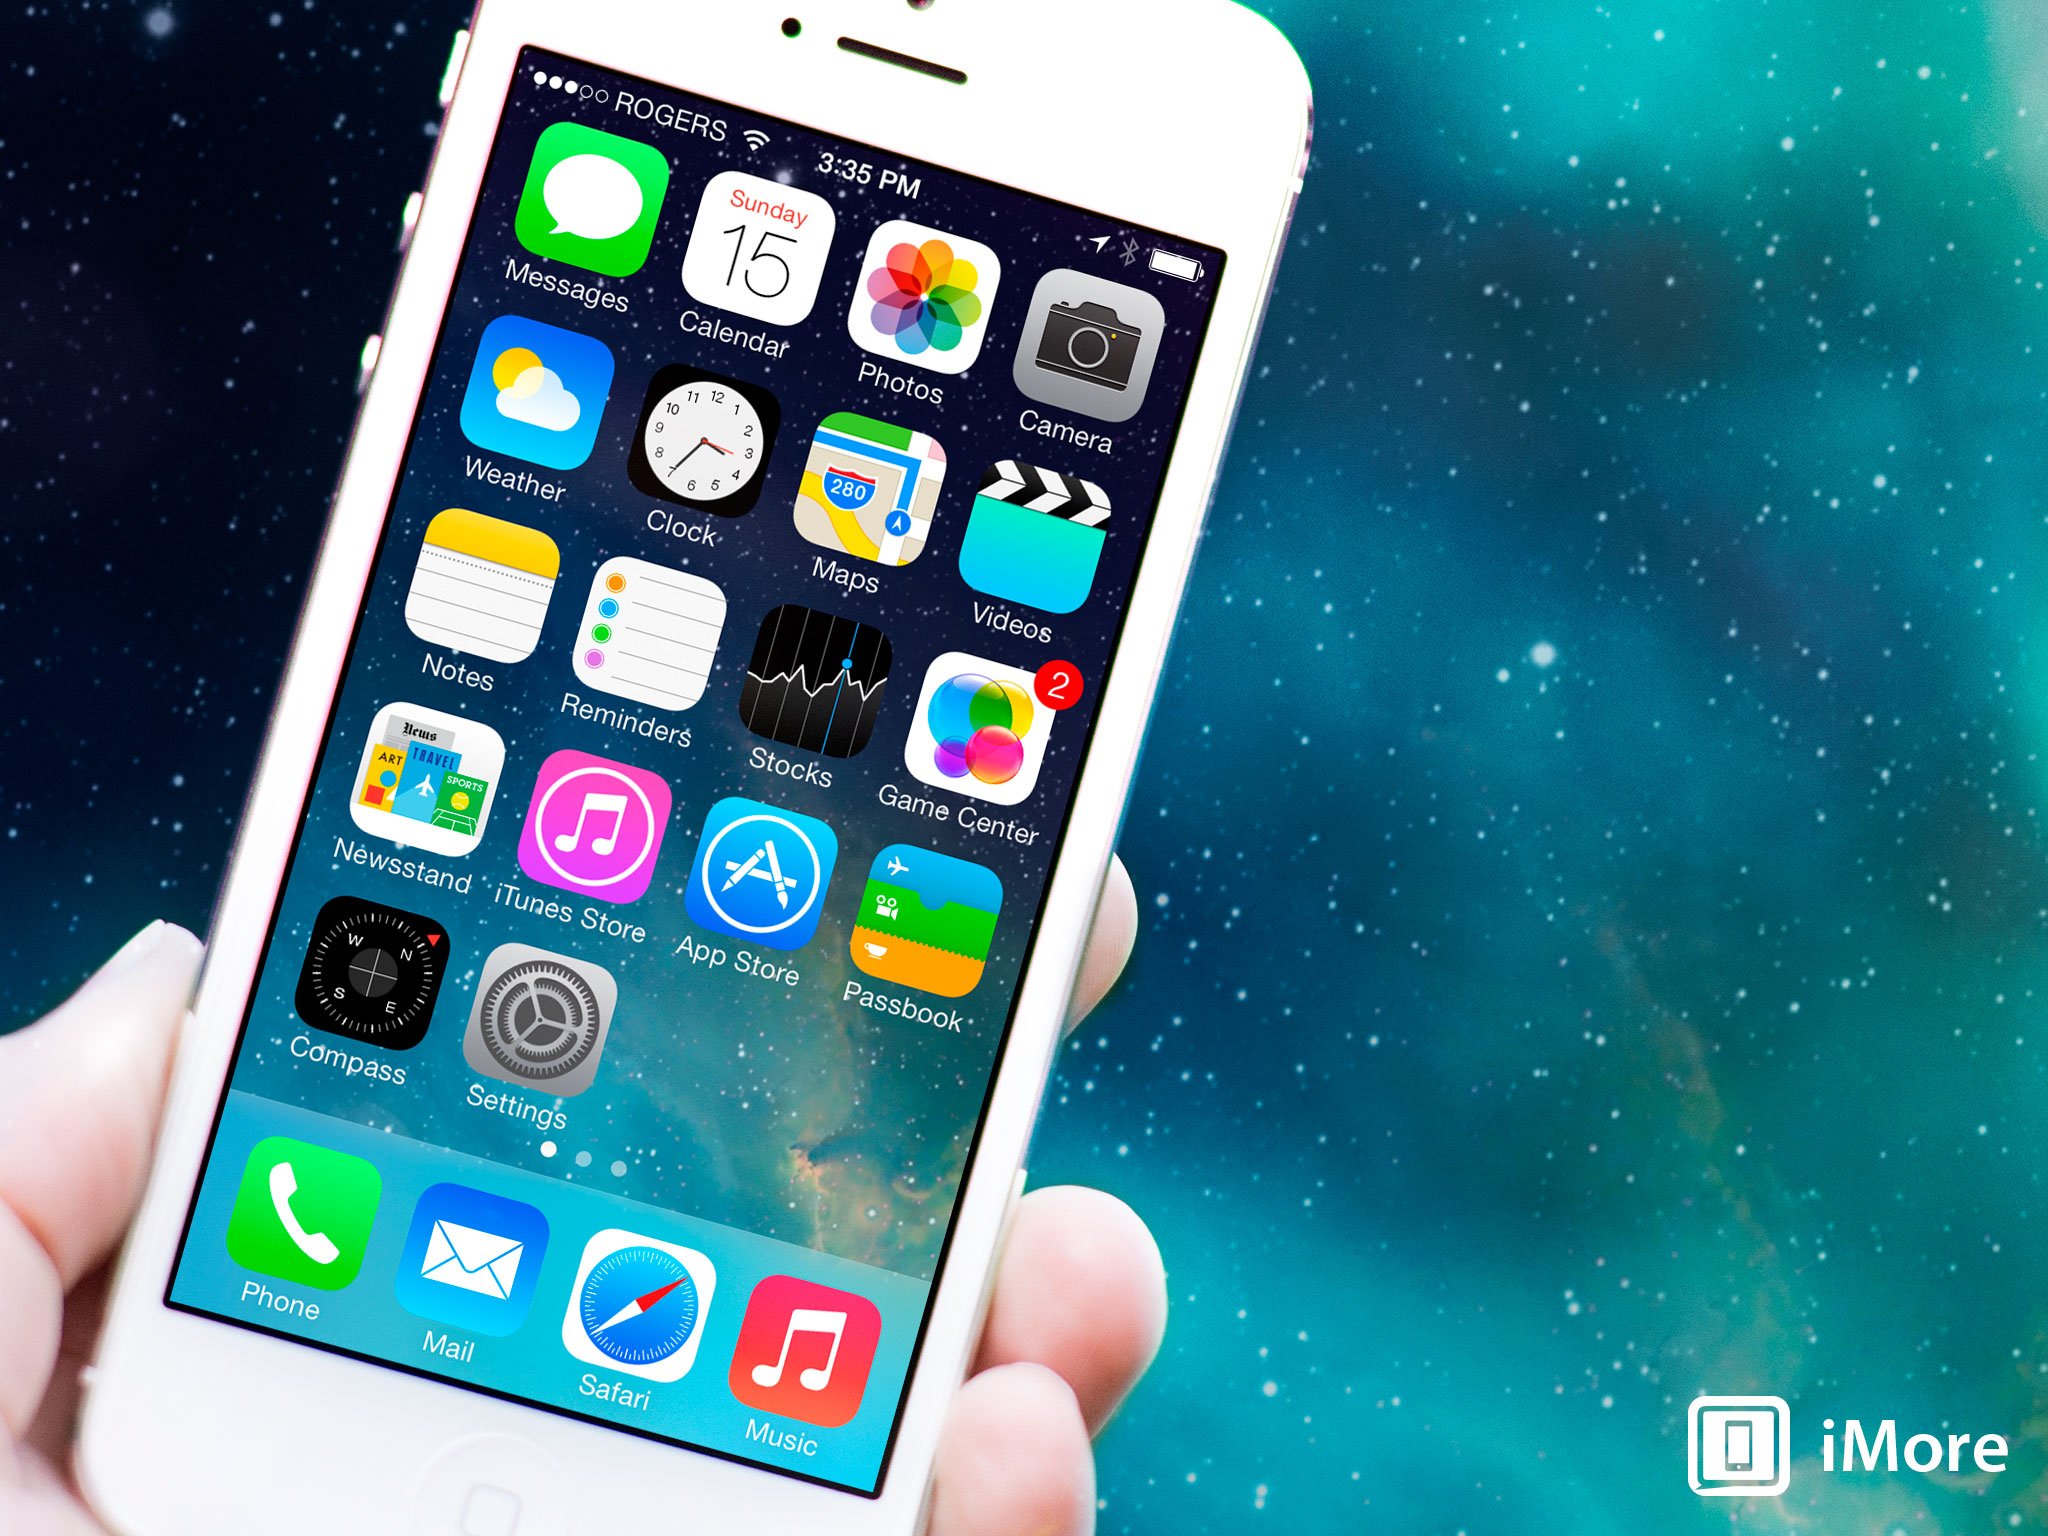 Apple posts iOS 7.1 beta 2 - developers, go get it!